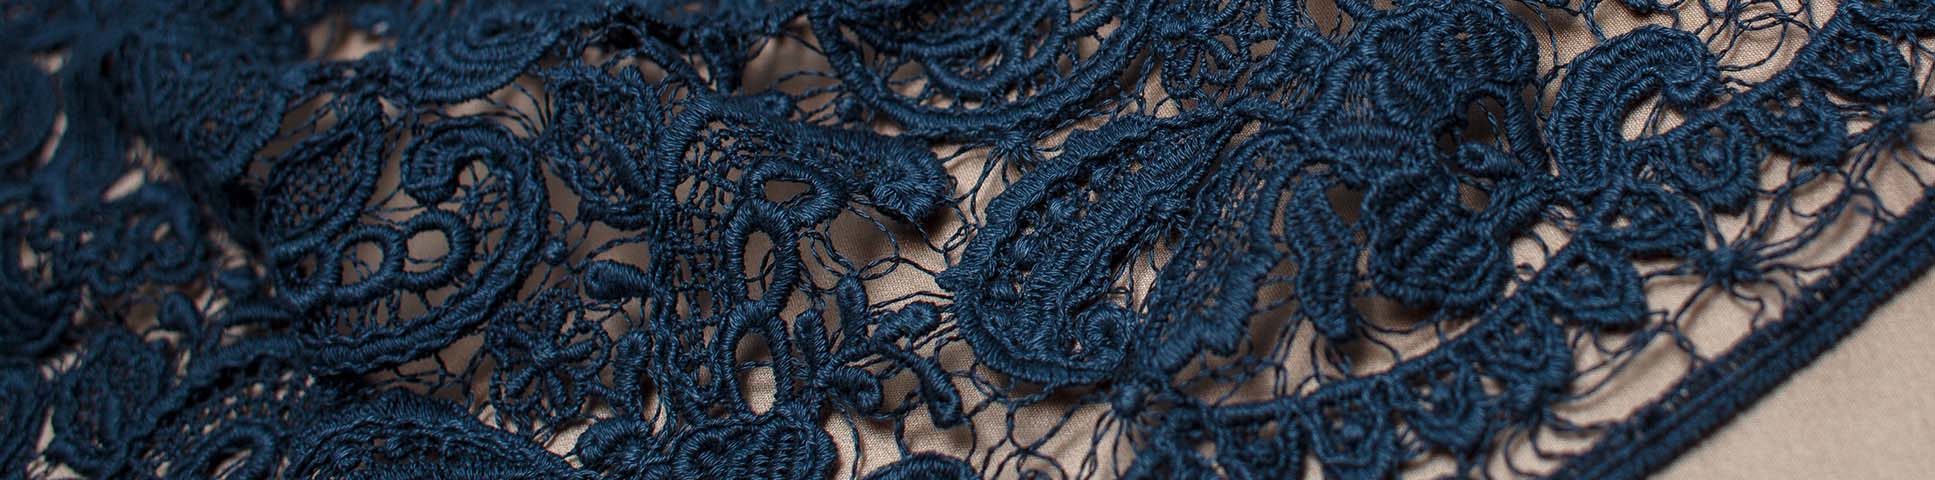 navy blue lace